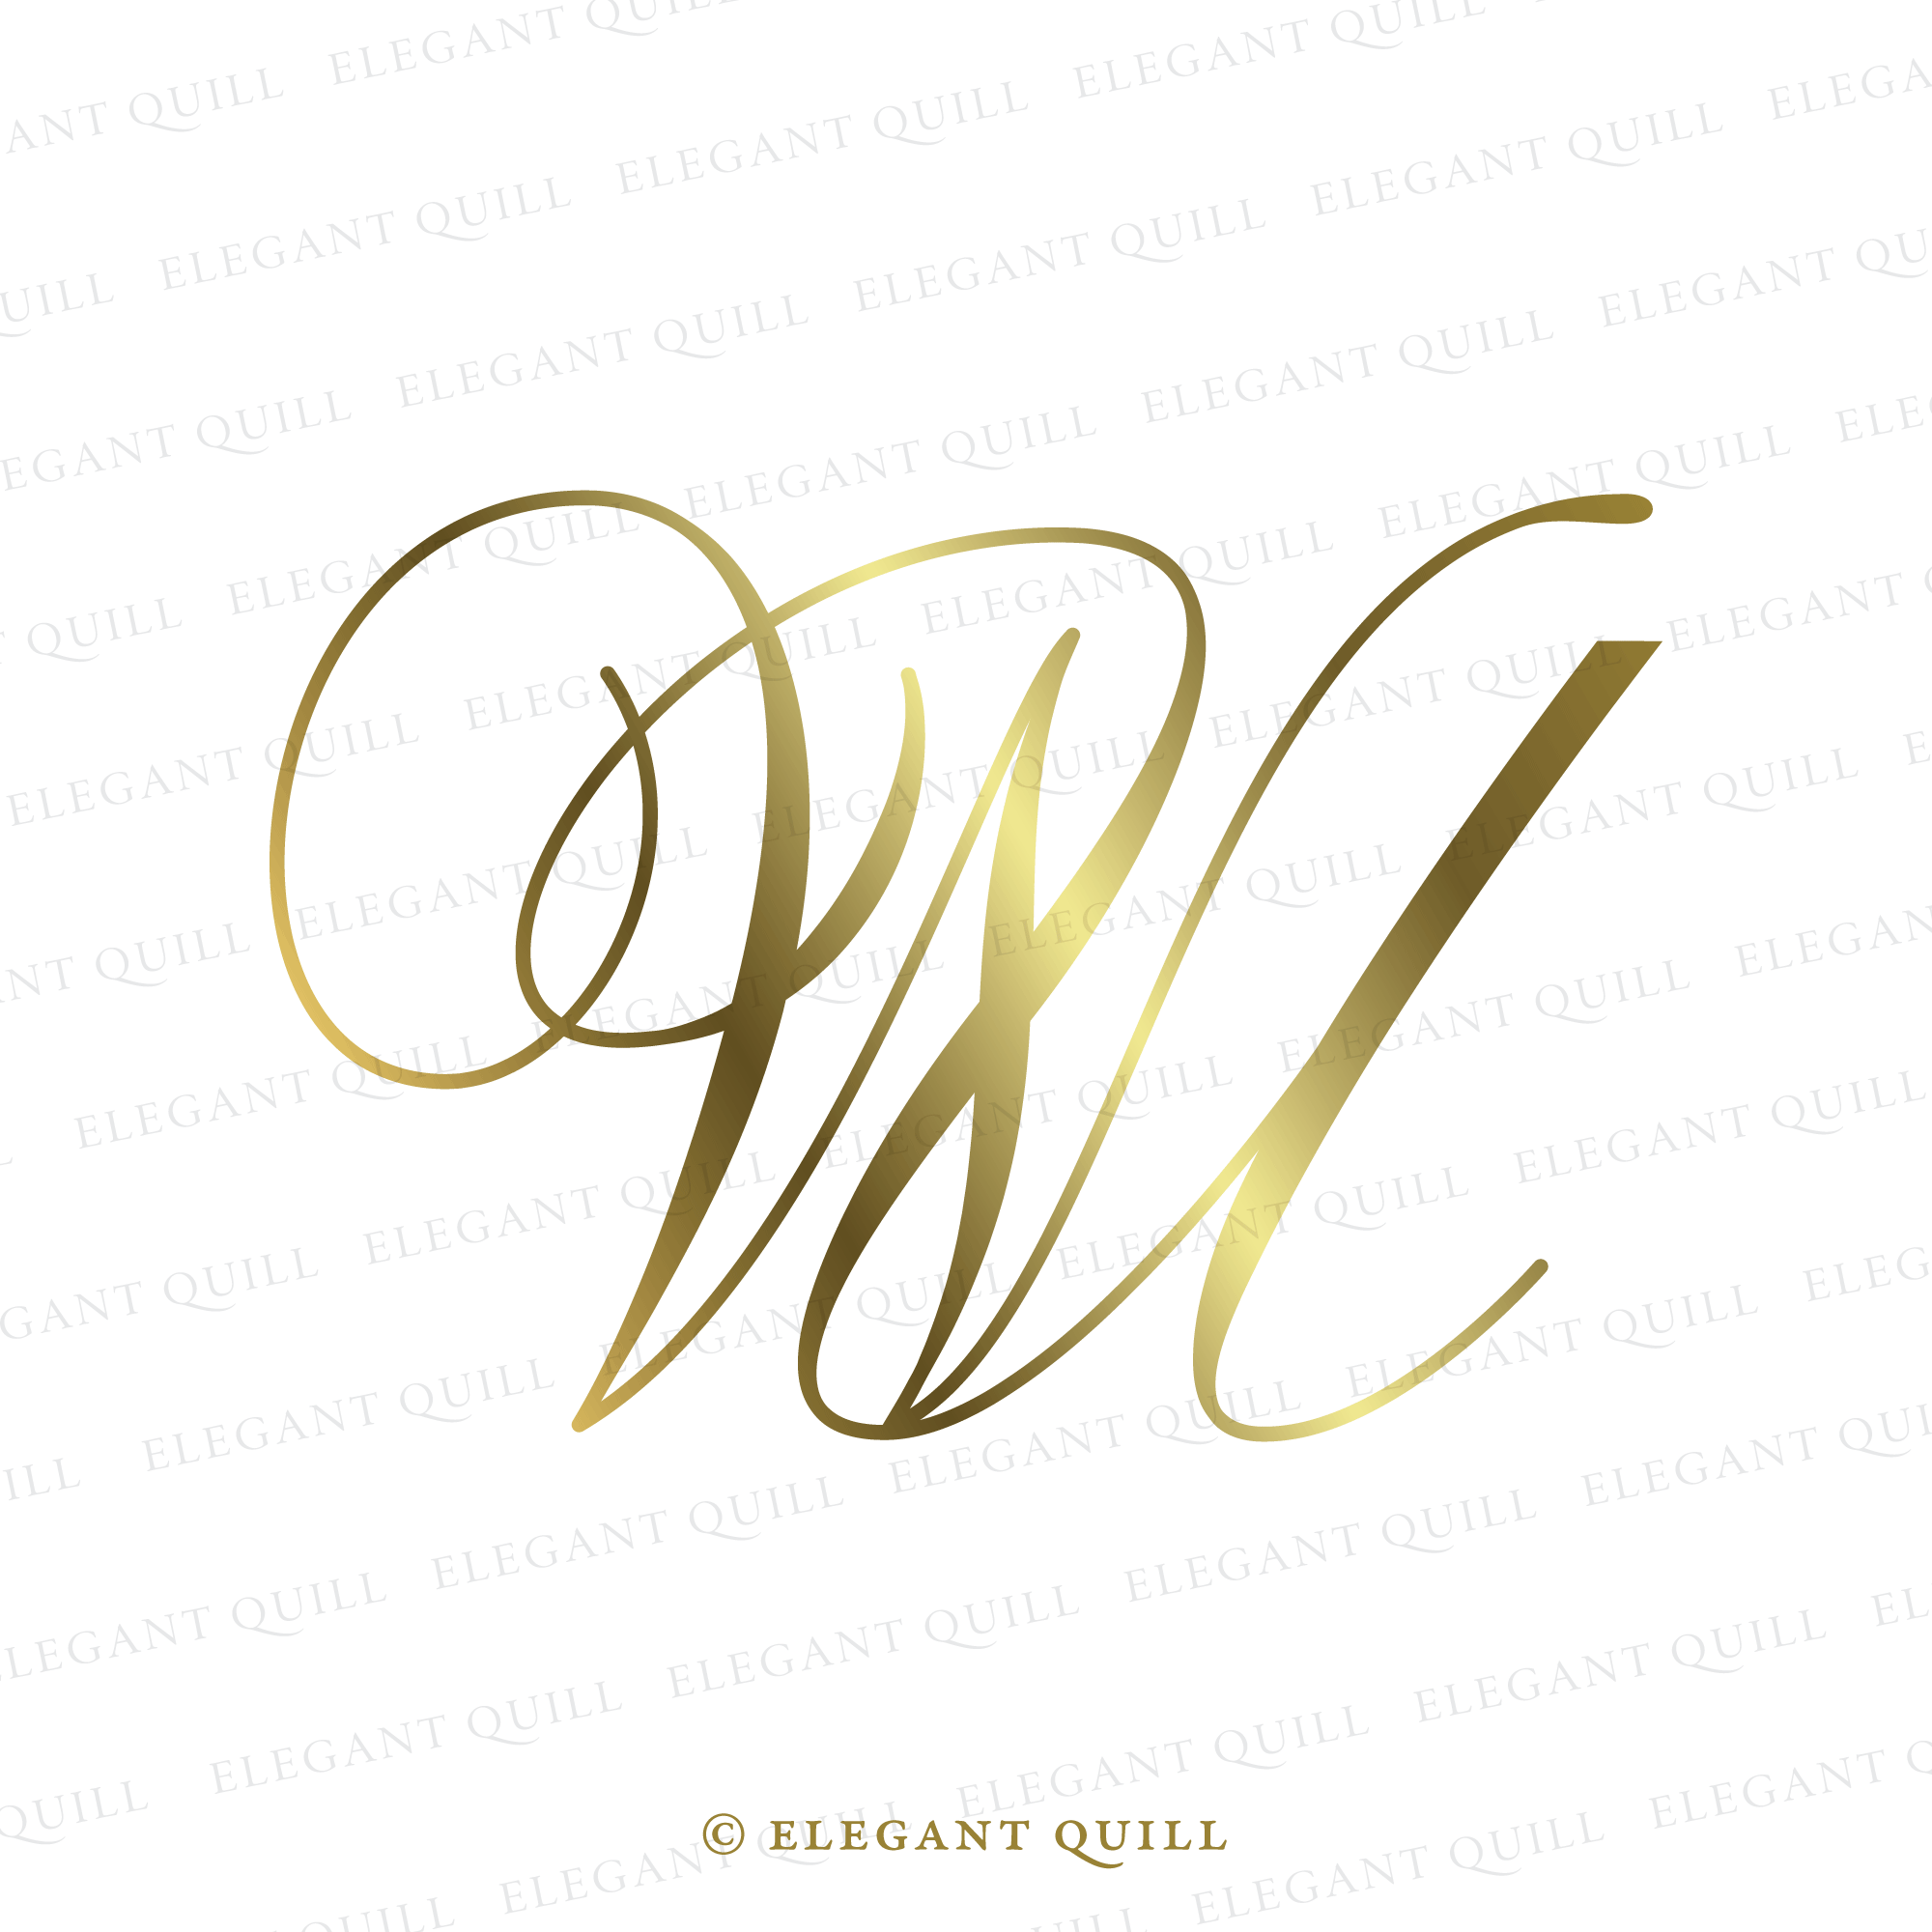 My wedding logo, Logo design contest